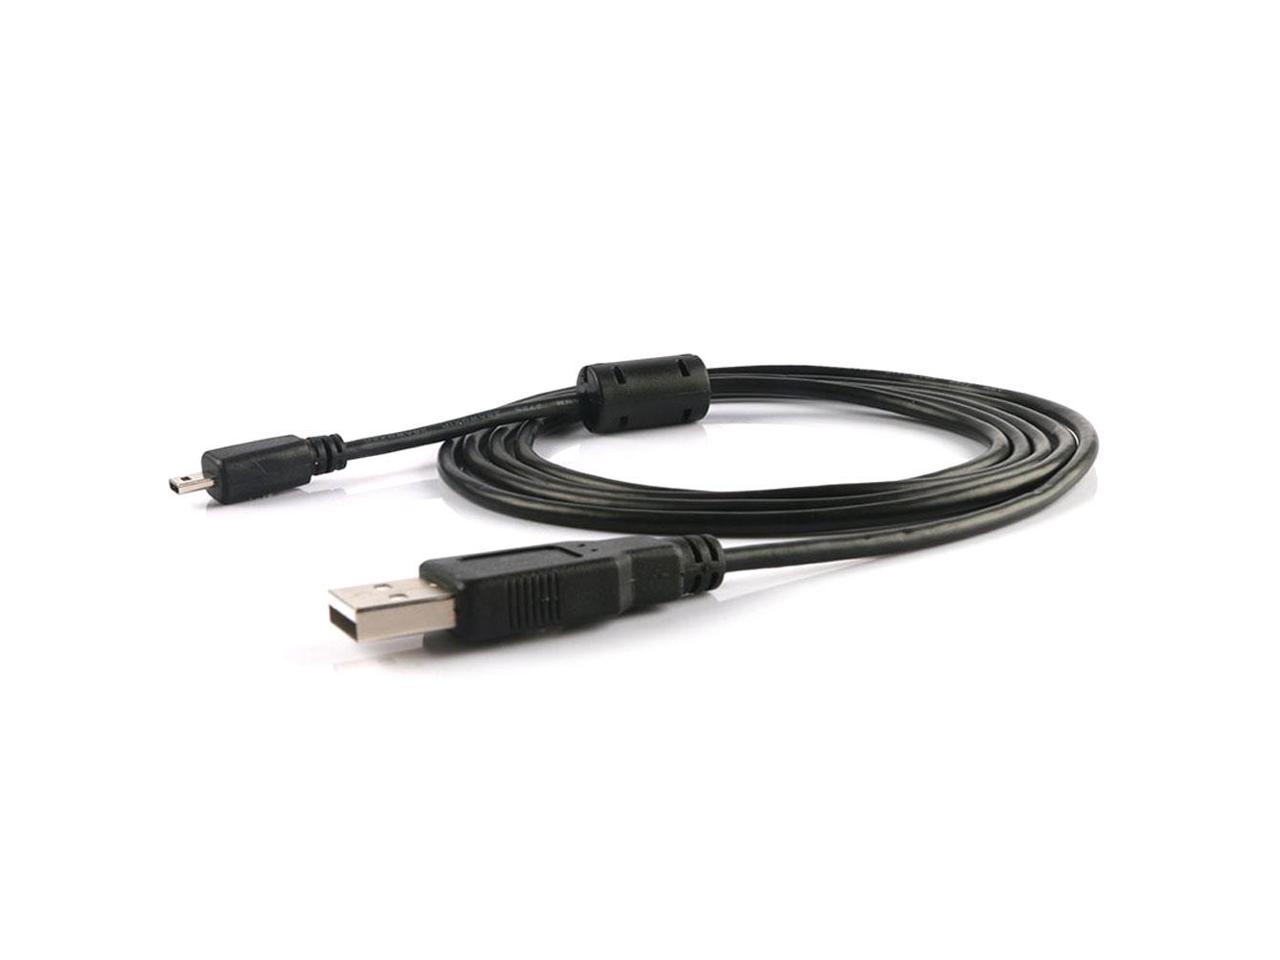 USB PC Data SYNC Cable Cord Lead For Pentax Optio CAMERA P80 P70 W70 Z10 Z20 